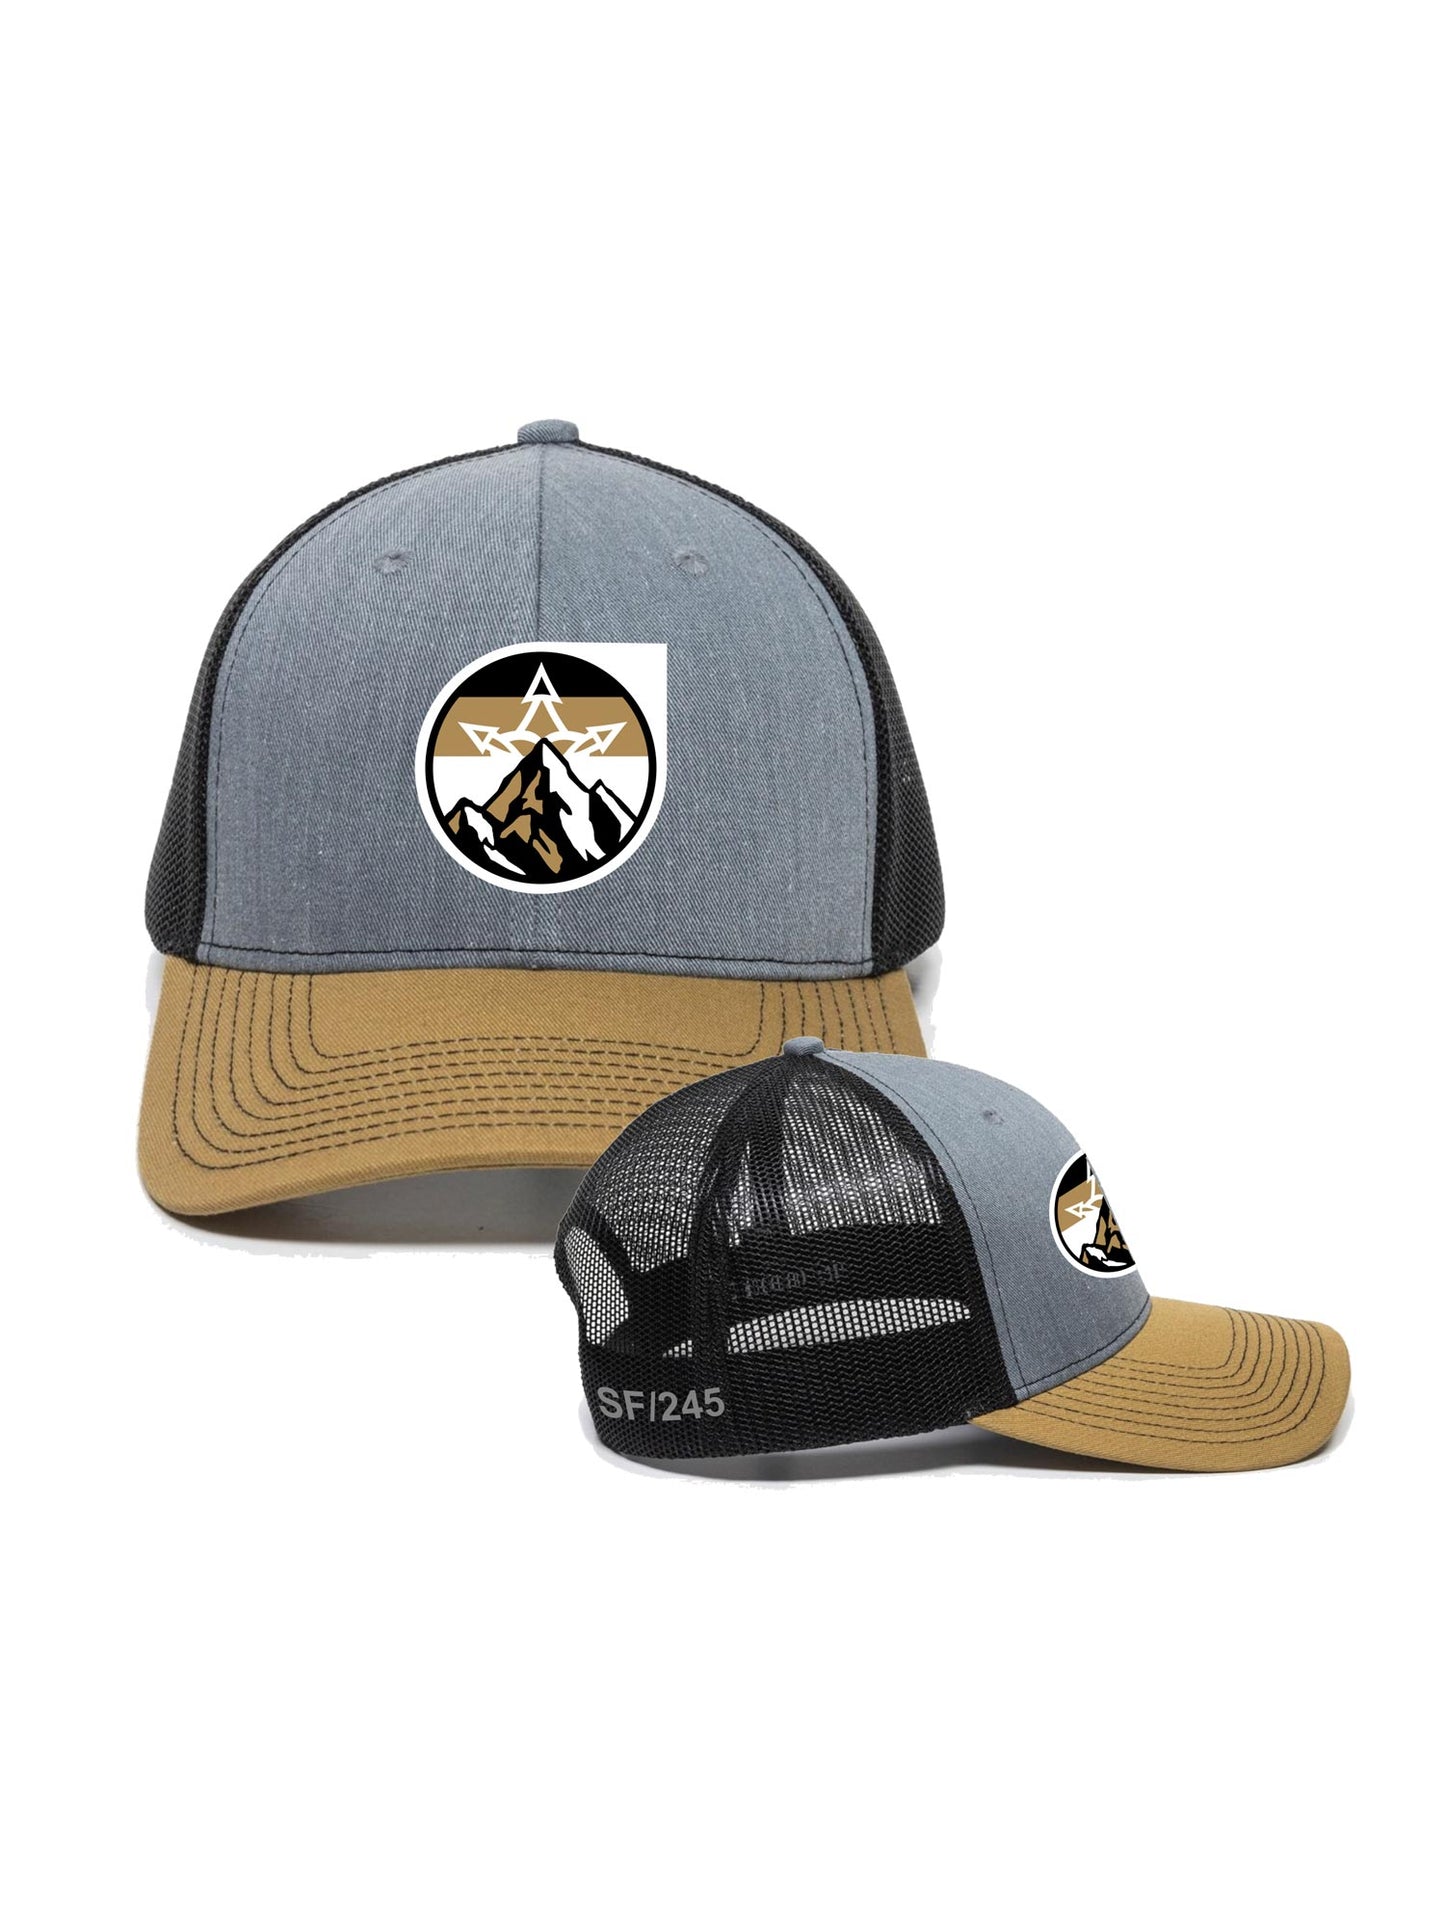 Snowflake Mountain logo hat, tan grey and  black